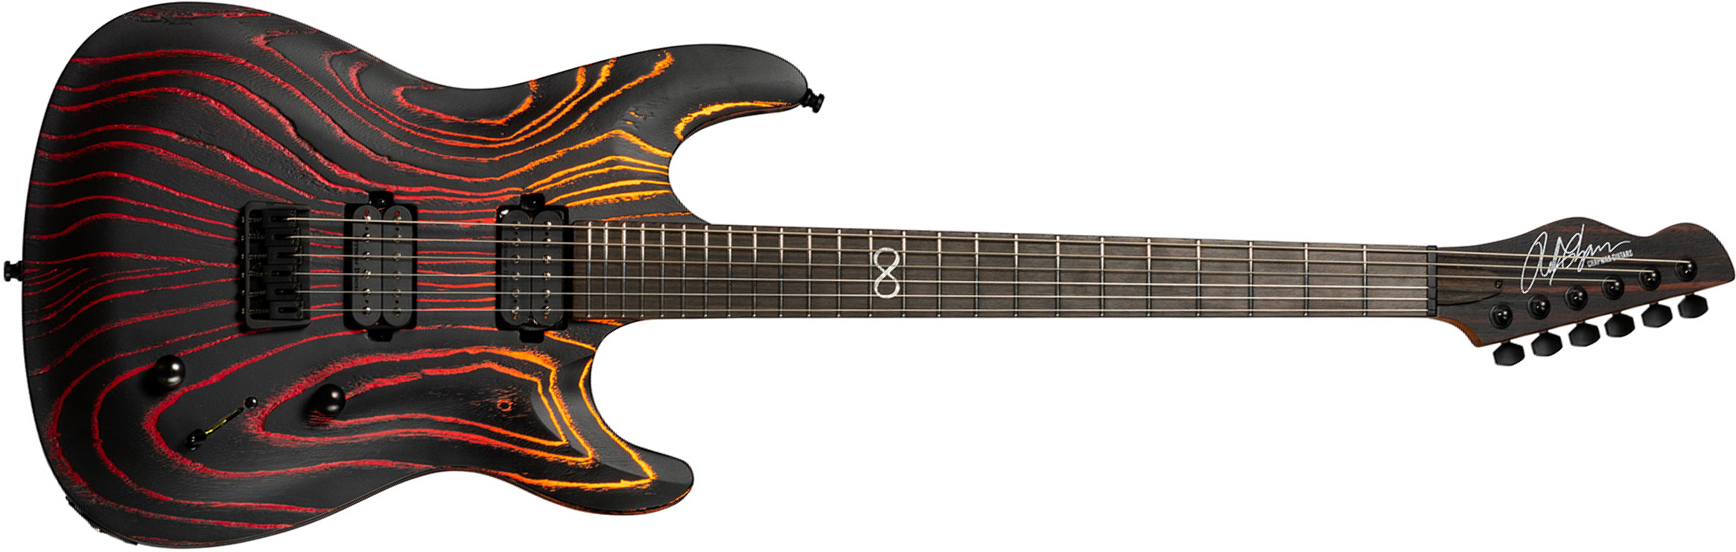 Chapman Guitars Ml1 Pro Modern Pro Hh Seymour Duncan Ht Eb - Black Sun - Str shape electric guitar - Main picture